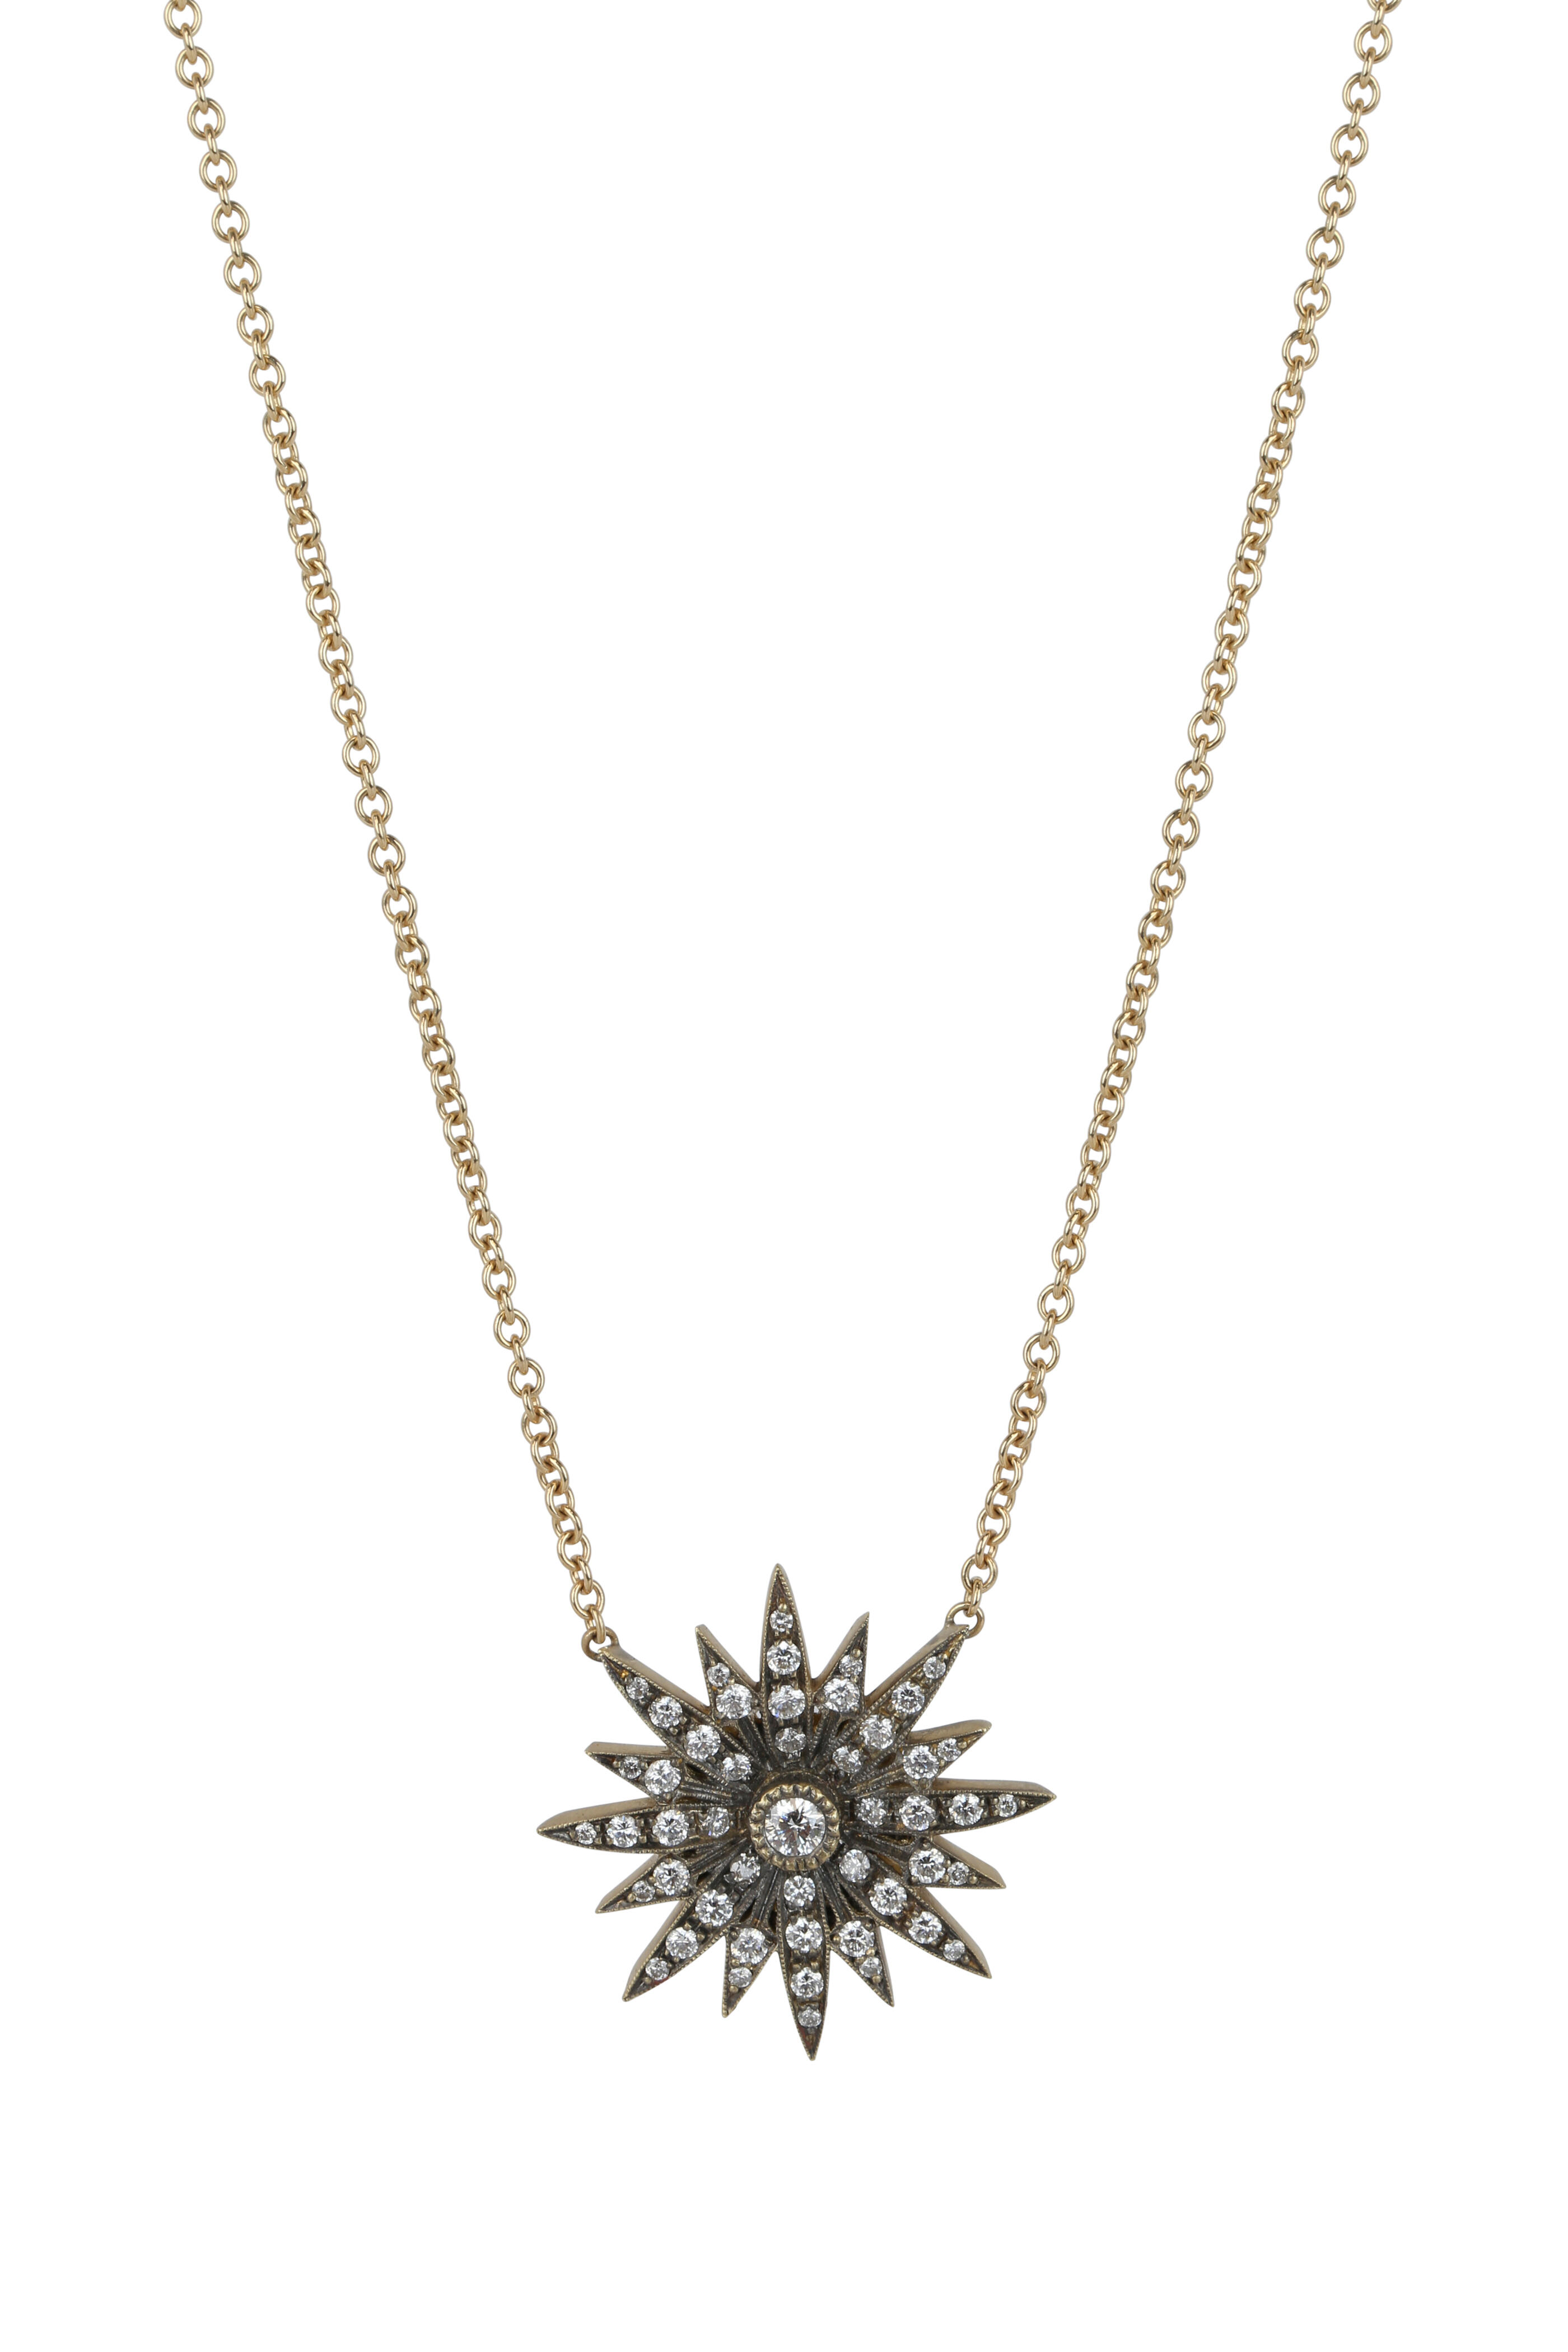 Sylva & Cie - 18K Yellow Gold Starburst Pendant Necklace